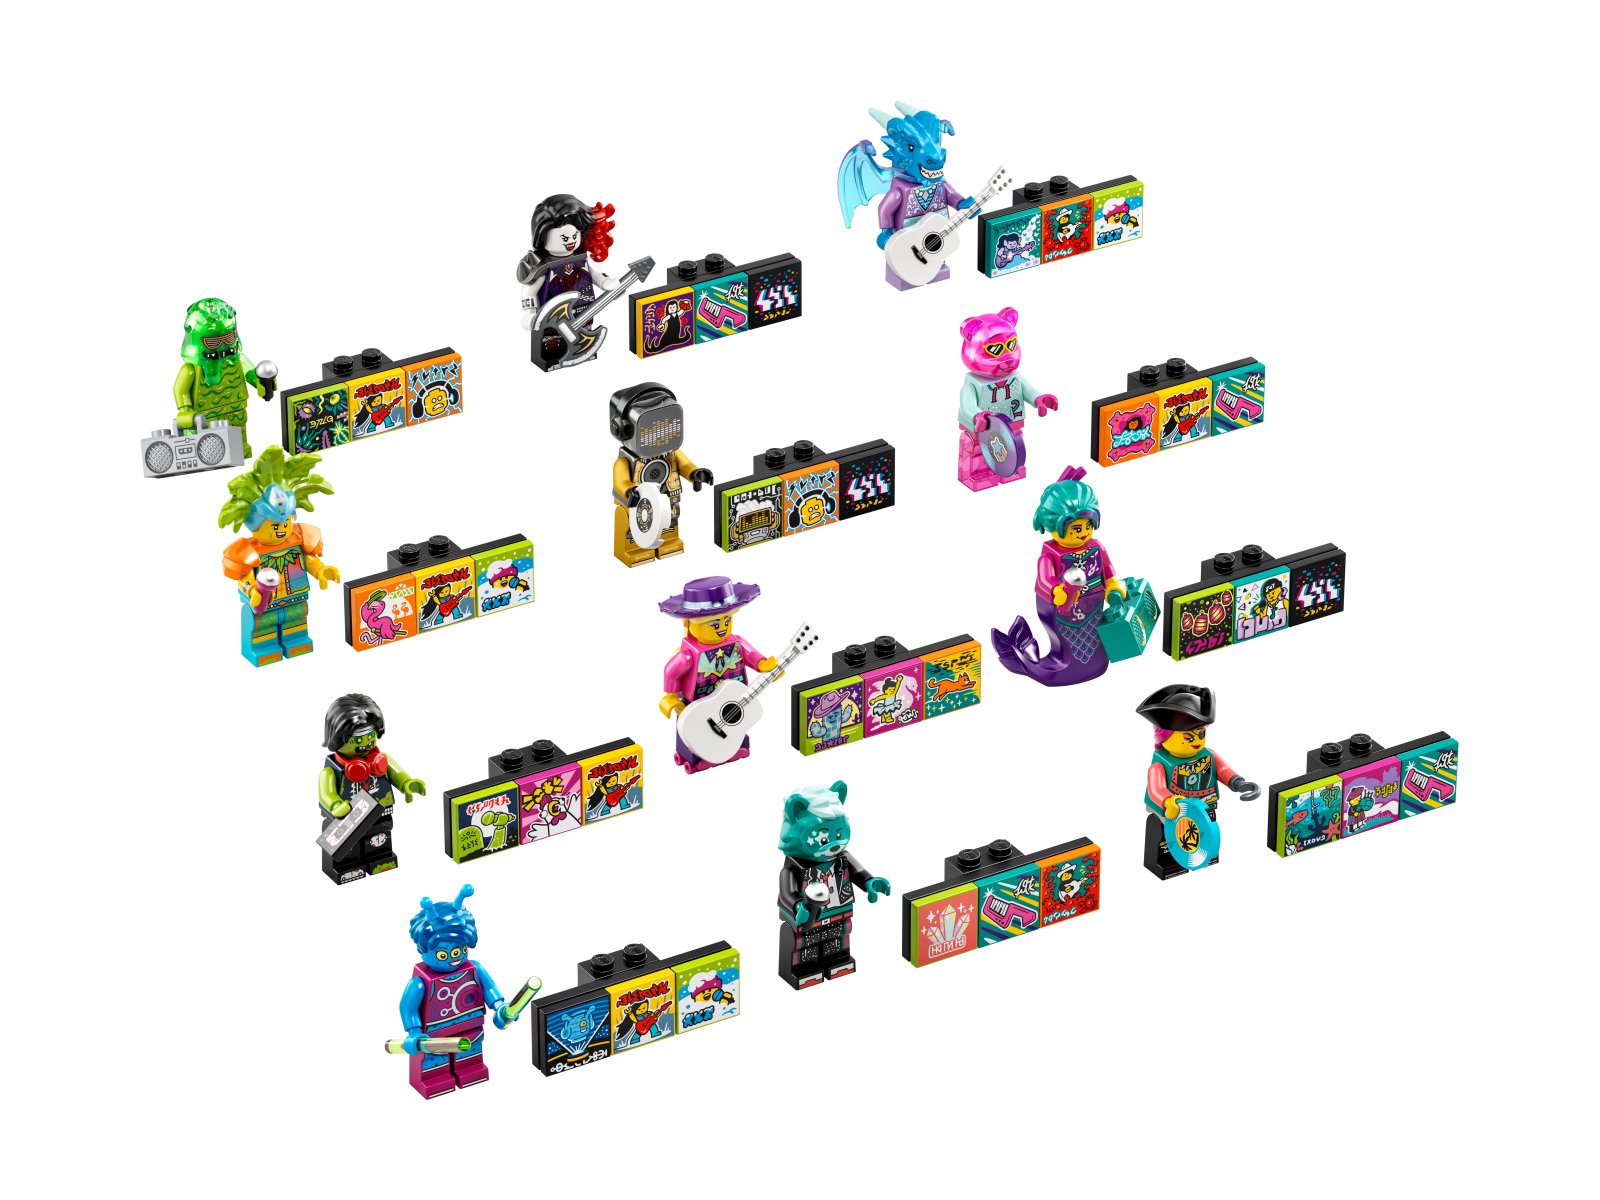 LEGO 43108 VIDIYO Bandmates - seria 2